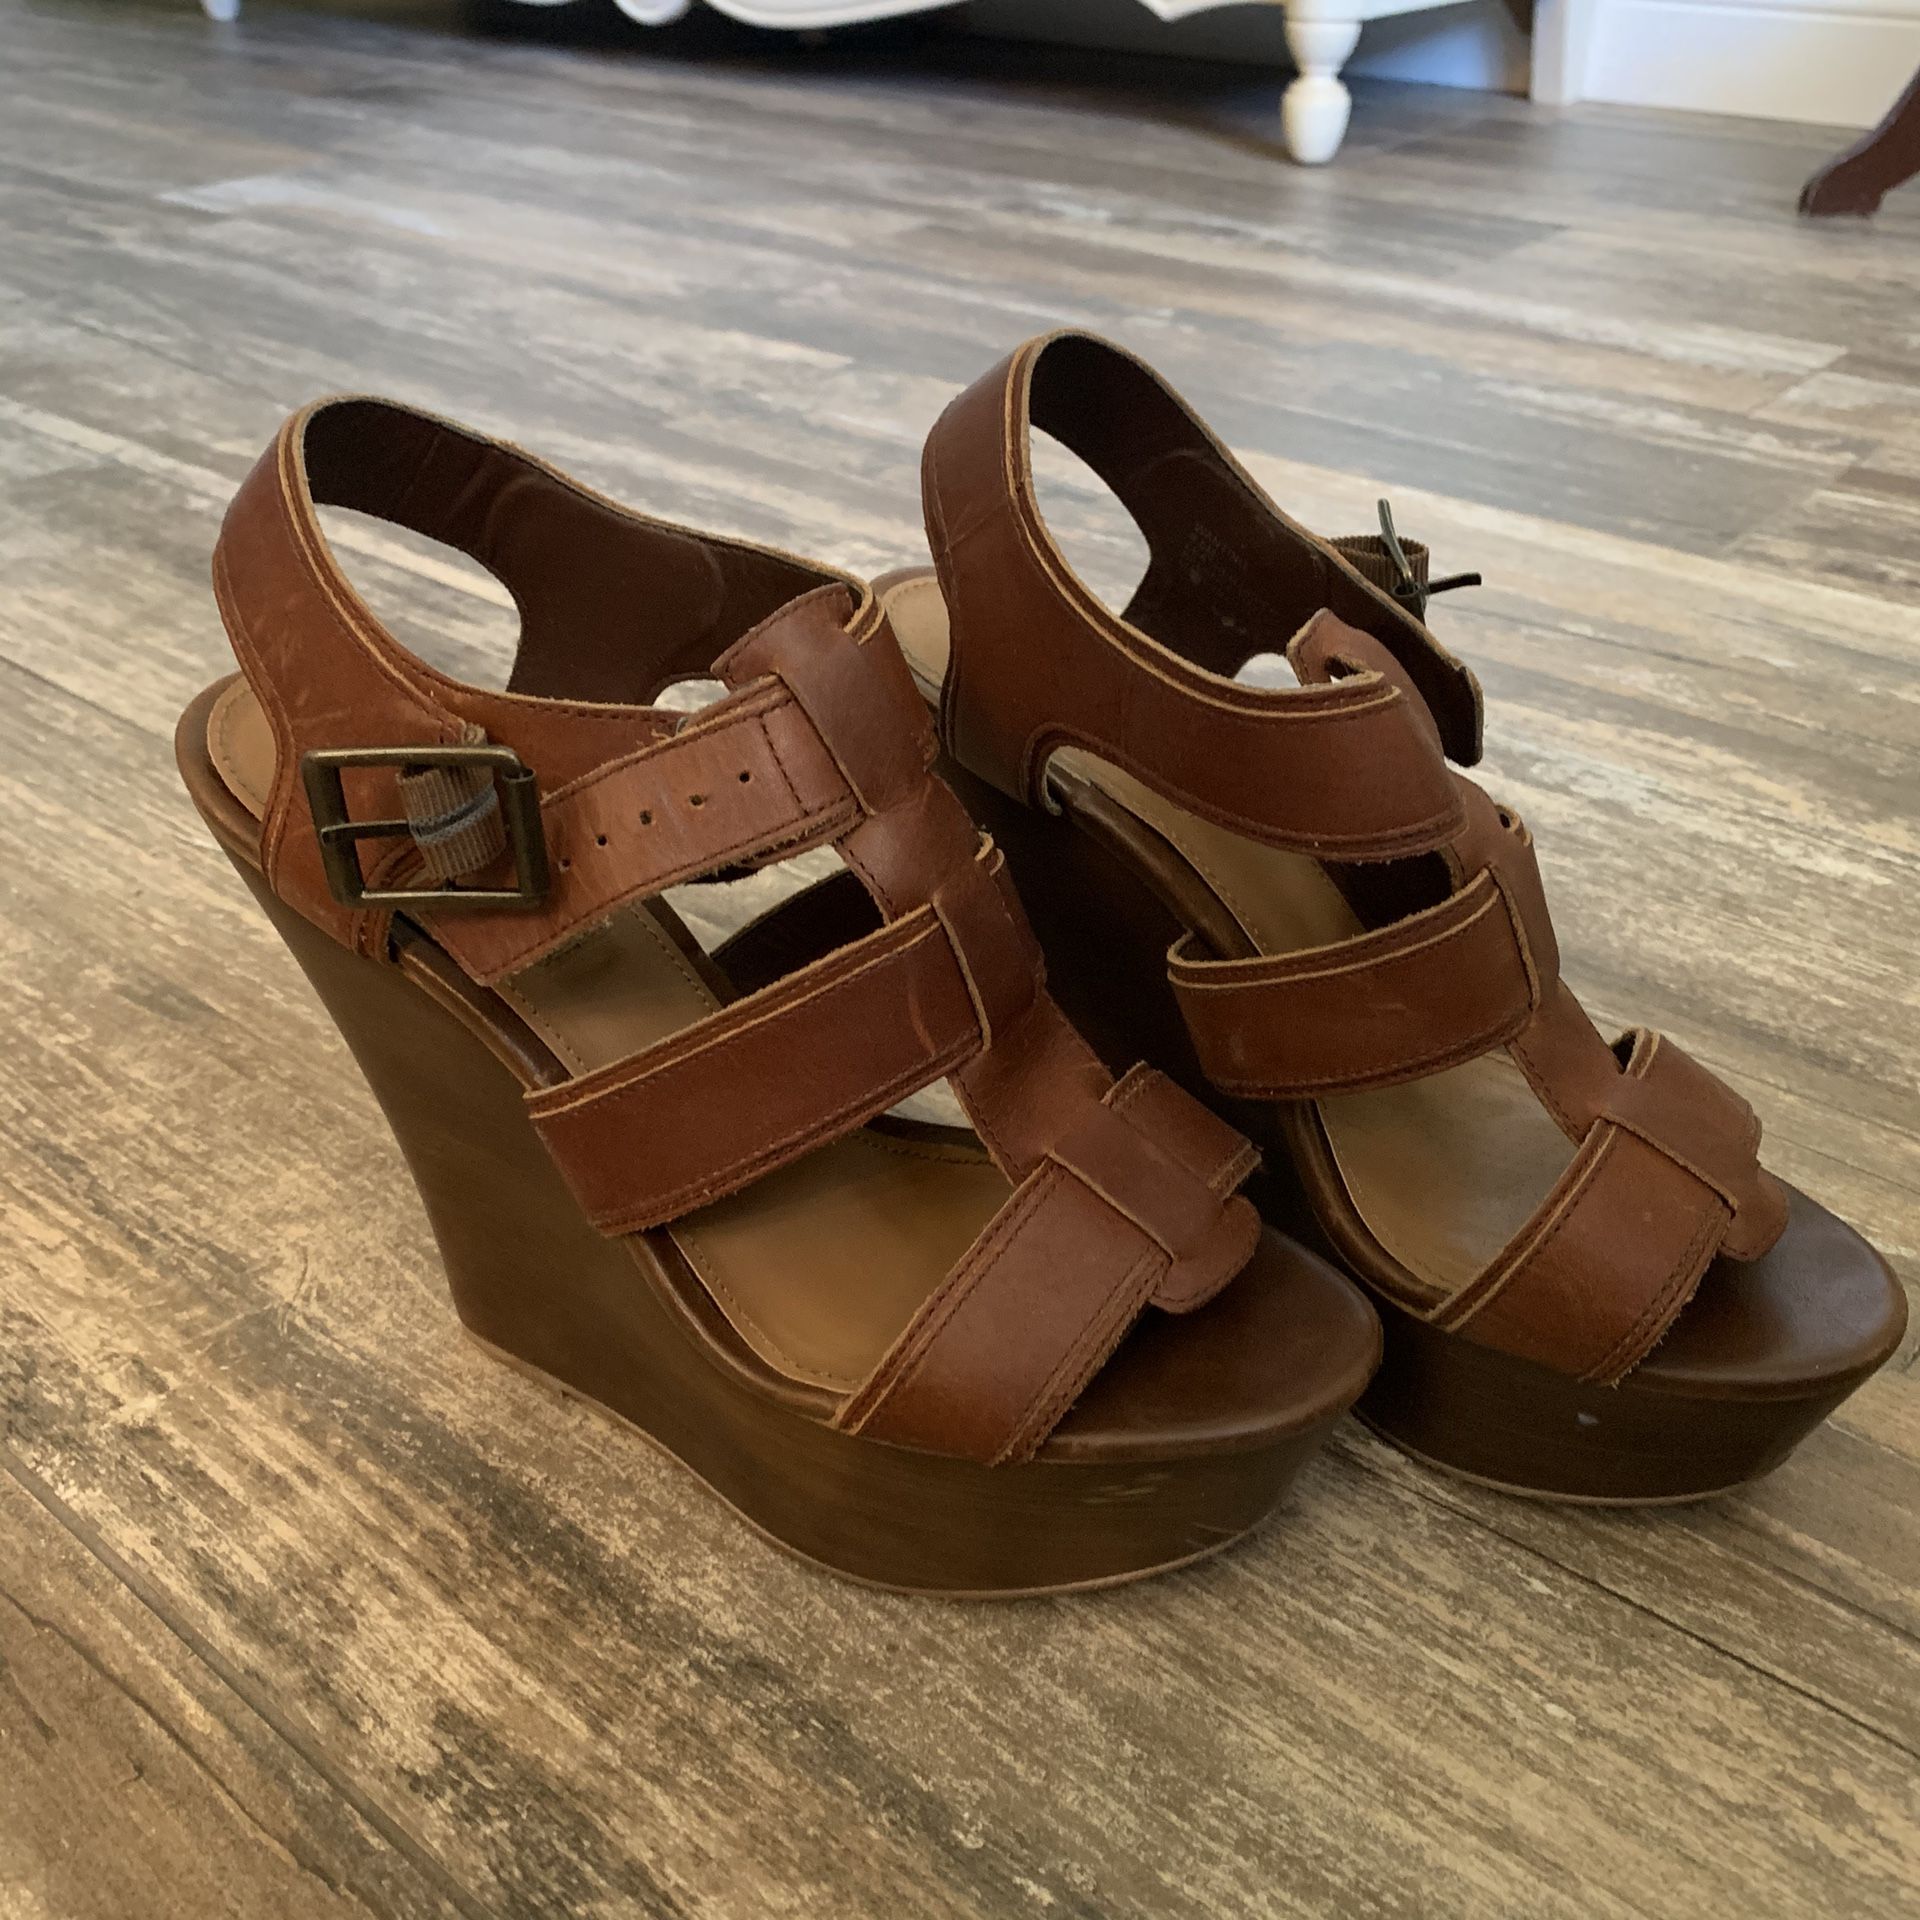 Women’s Steve Madden Leather Wedge Heels- Size 8.5